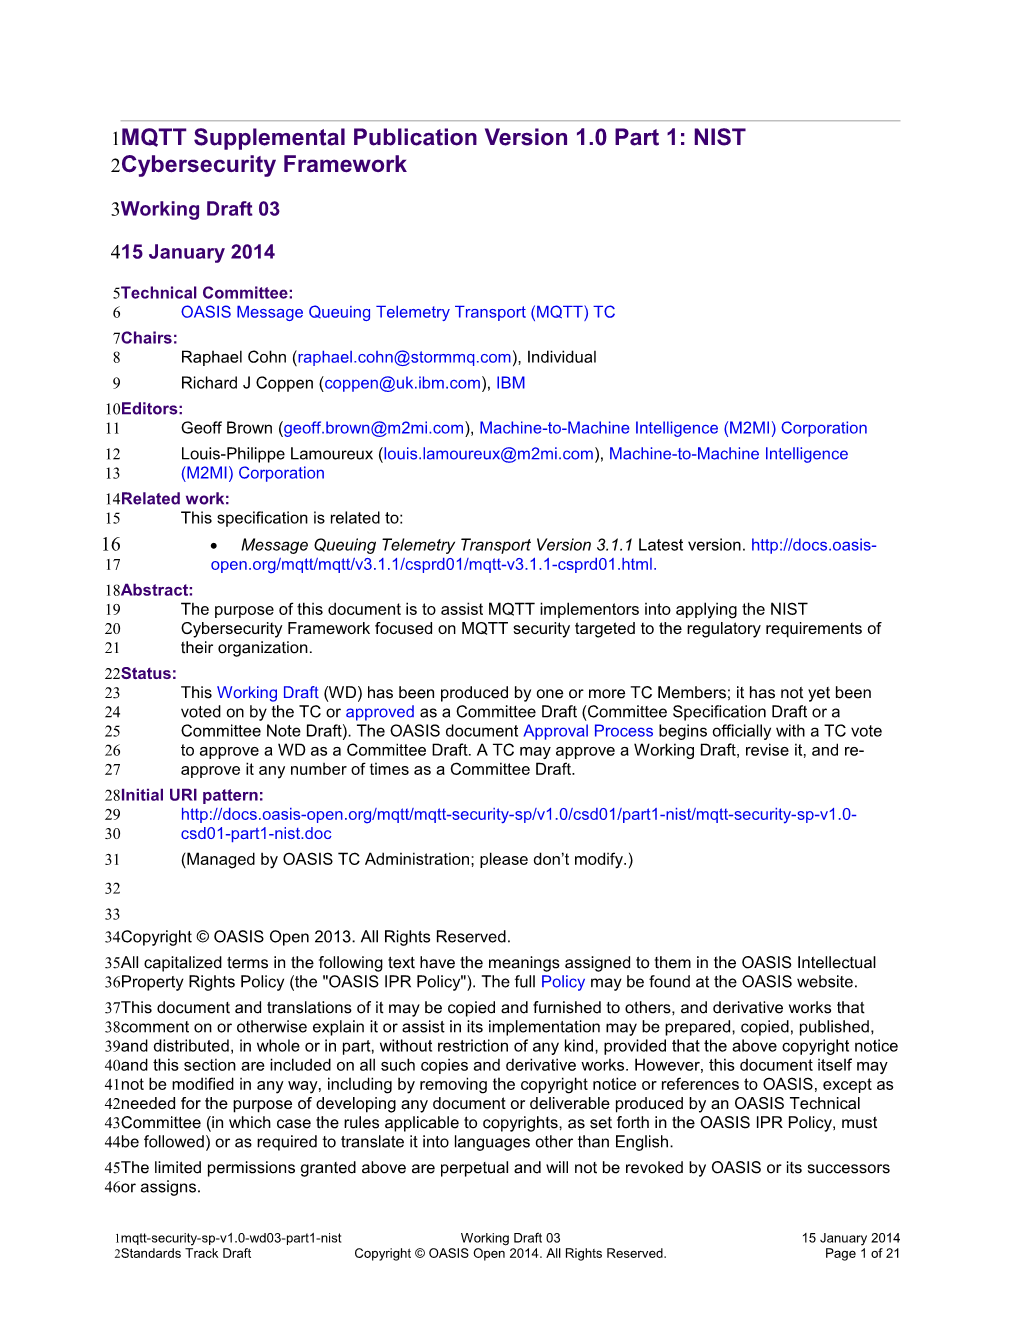 MQTT Supplemental Publication Version 1.0 Part 1: NIST Cyber Security Framework